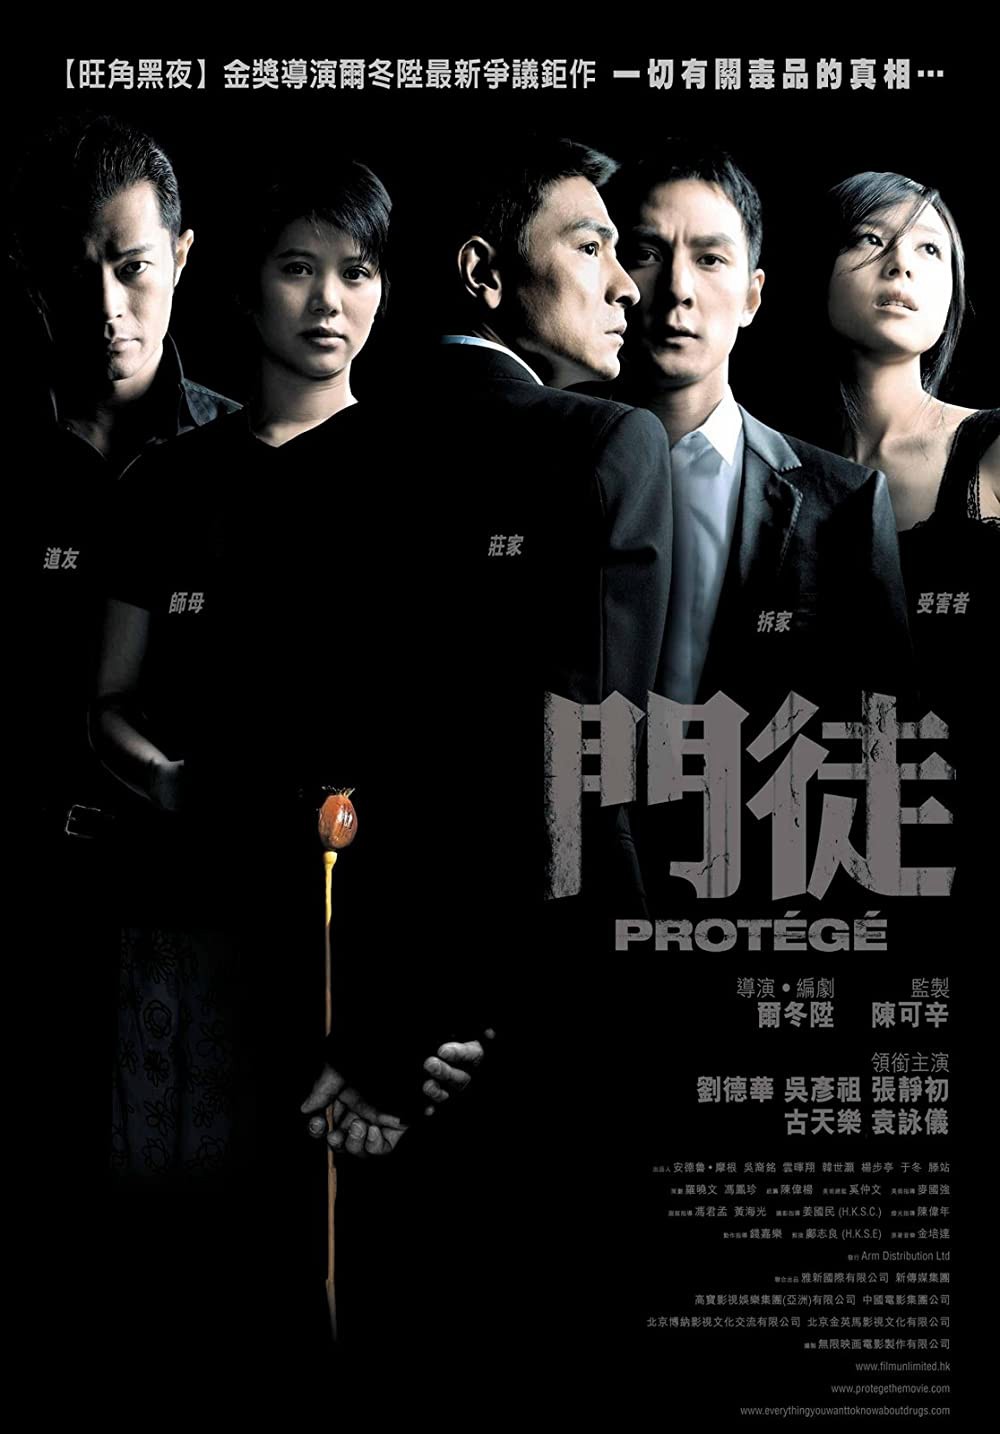 Môn đồ - Môn đồ (2007)